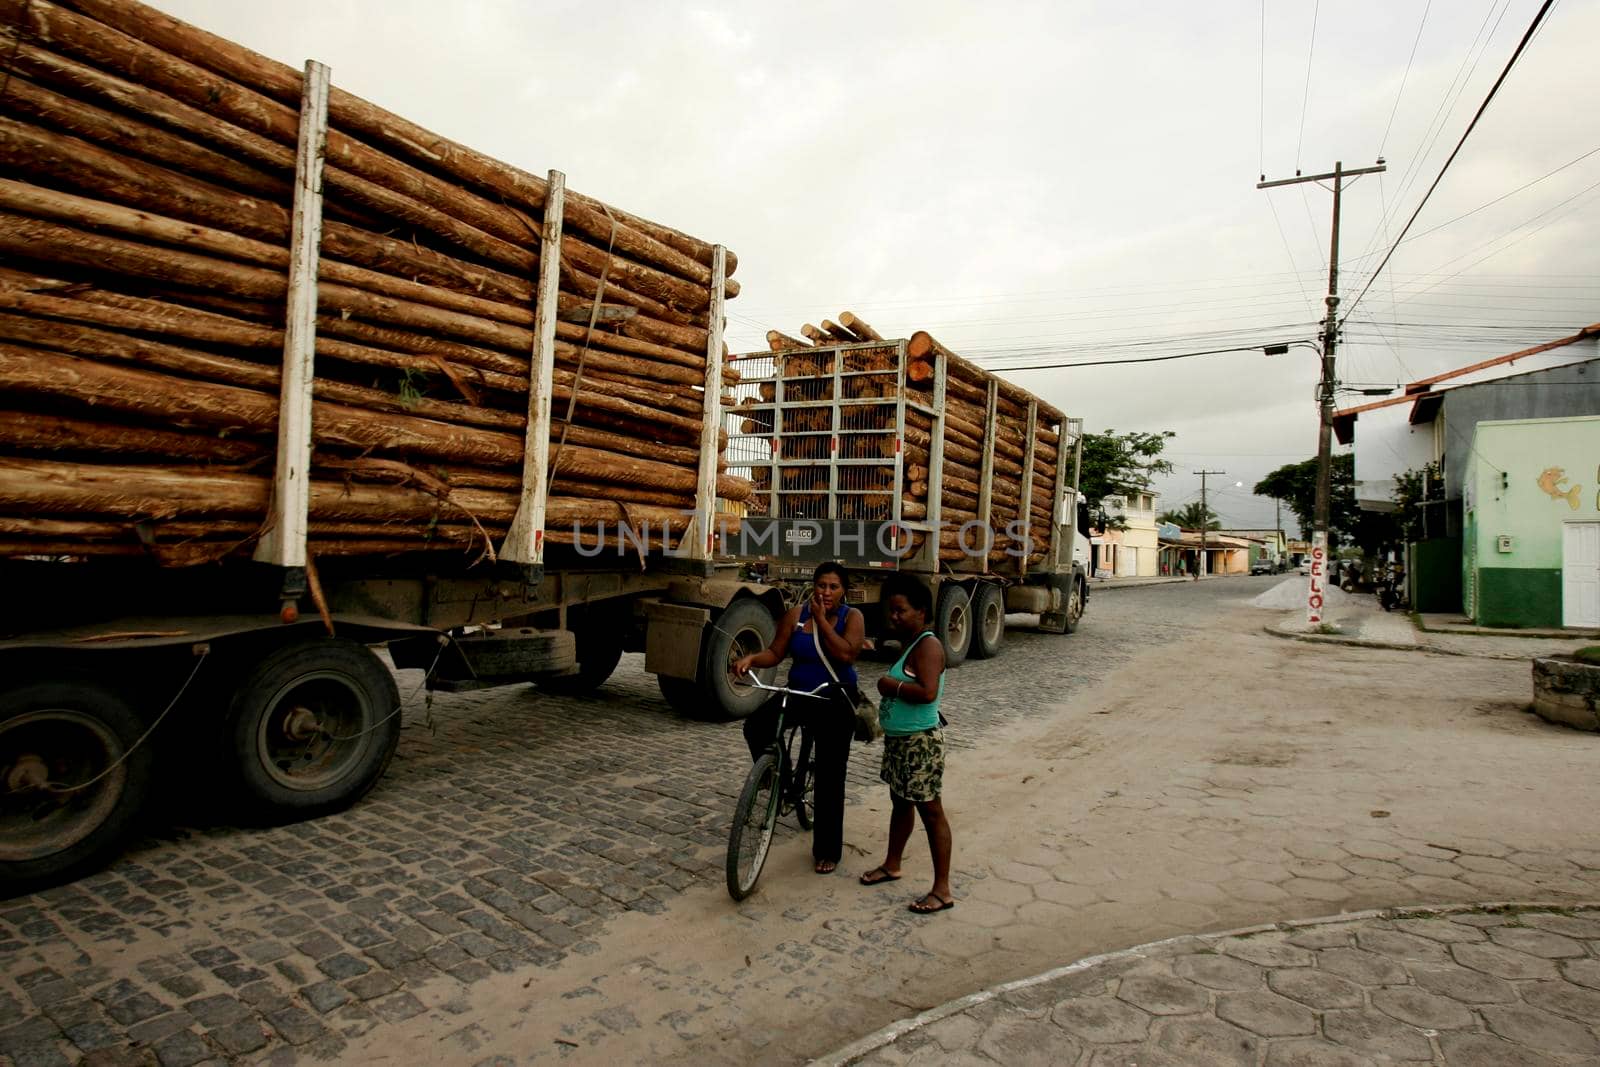 prado, bahia / brazil - july 7, 2009: truck transporting eucalyptus wood is seen in downtown Prado, in southern Bahia.